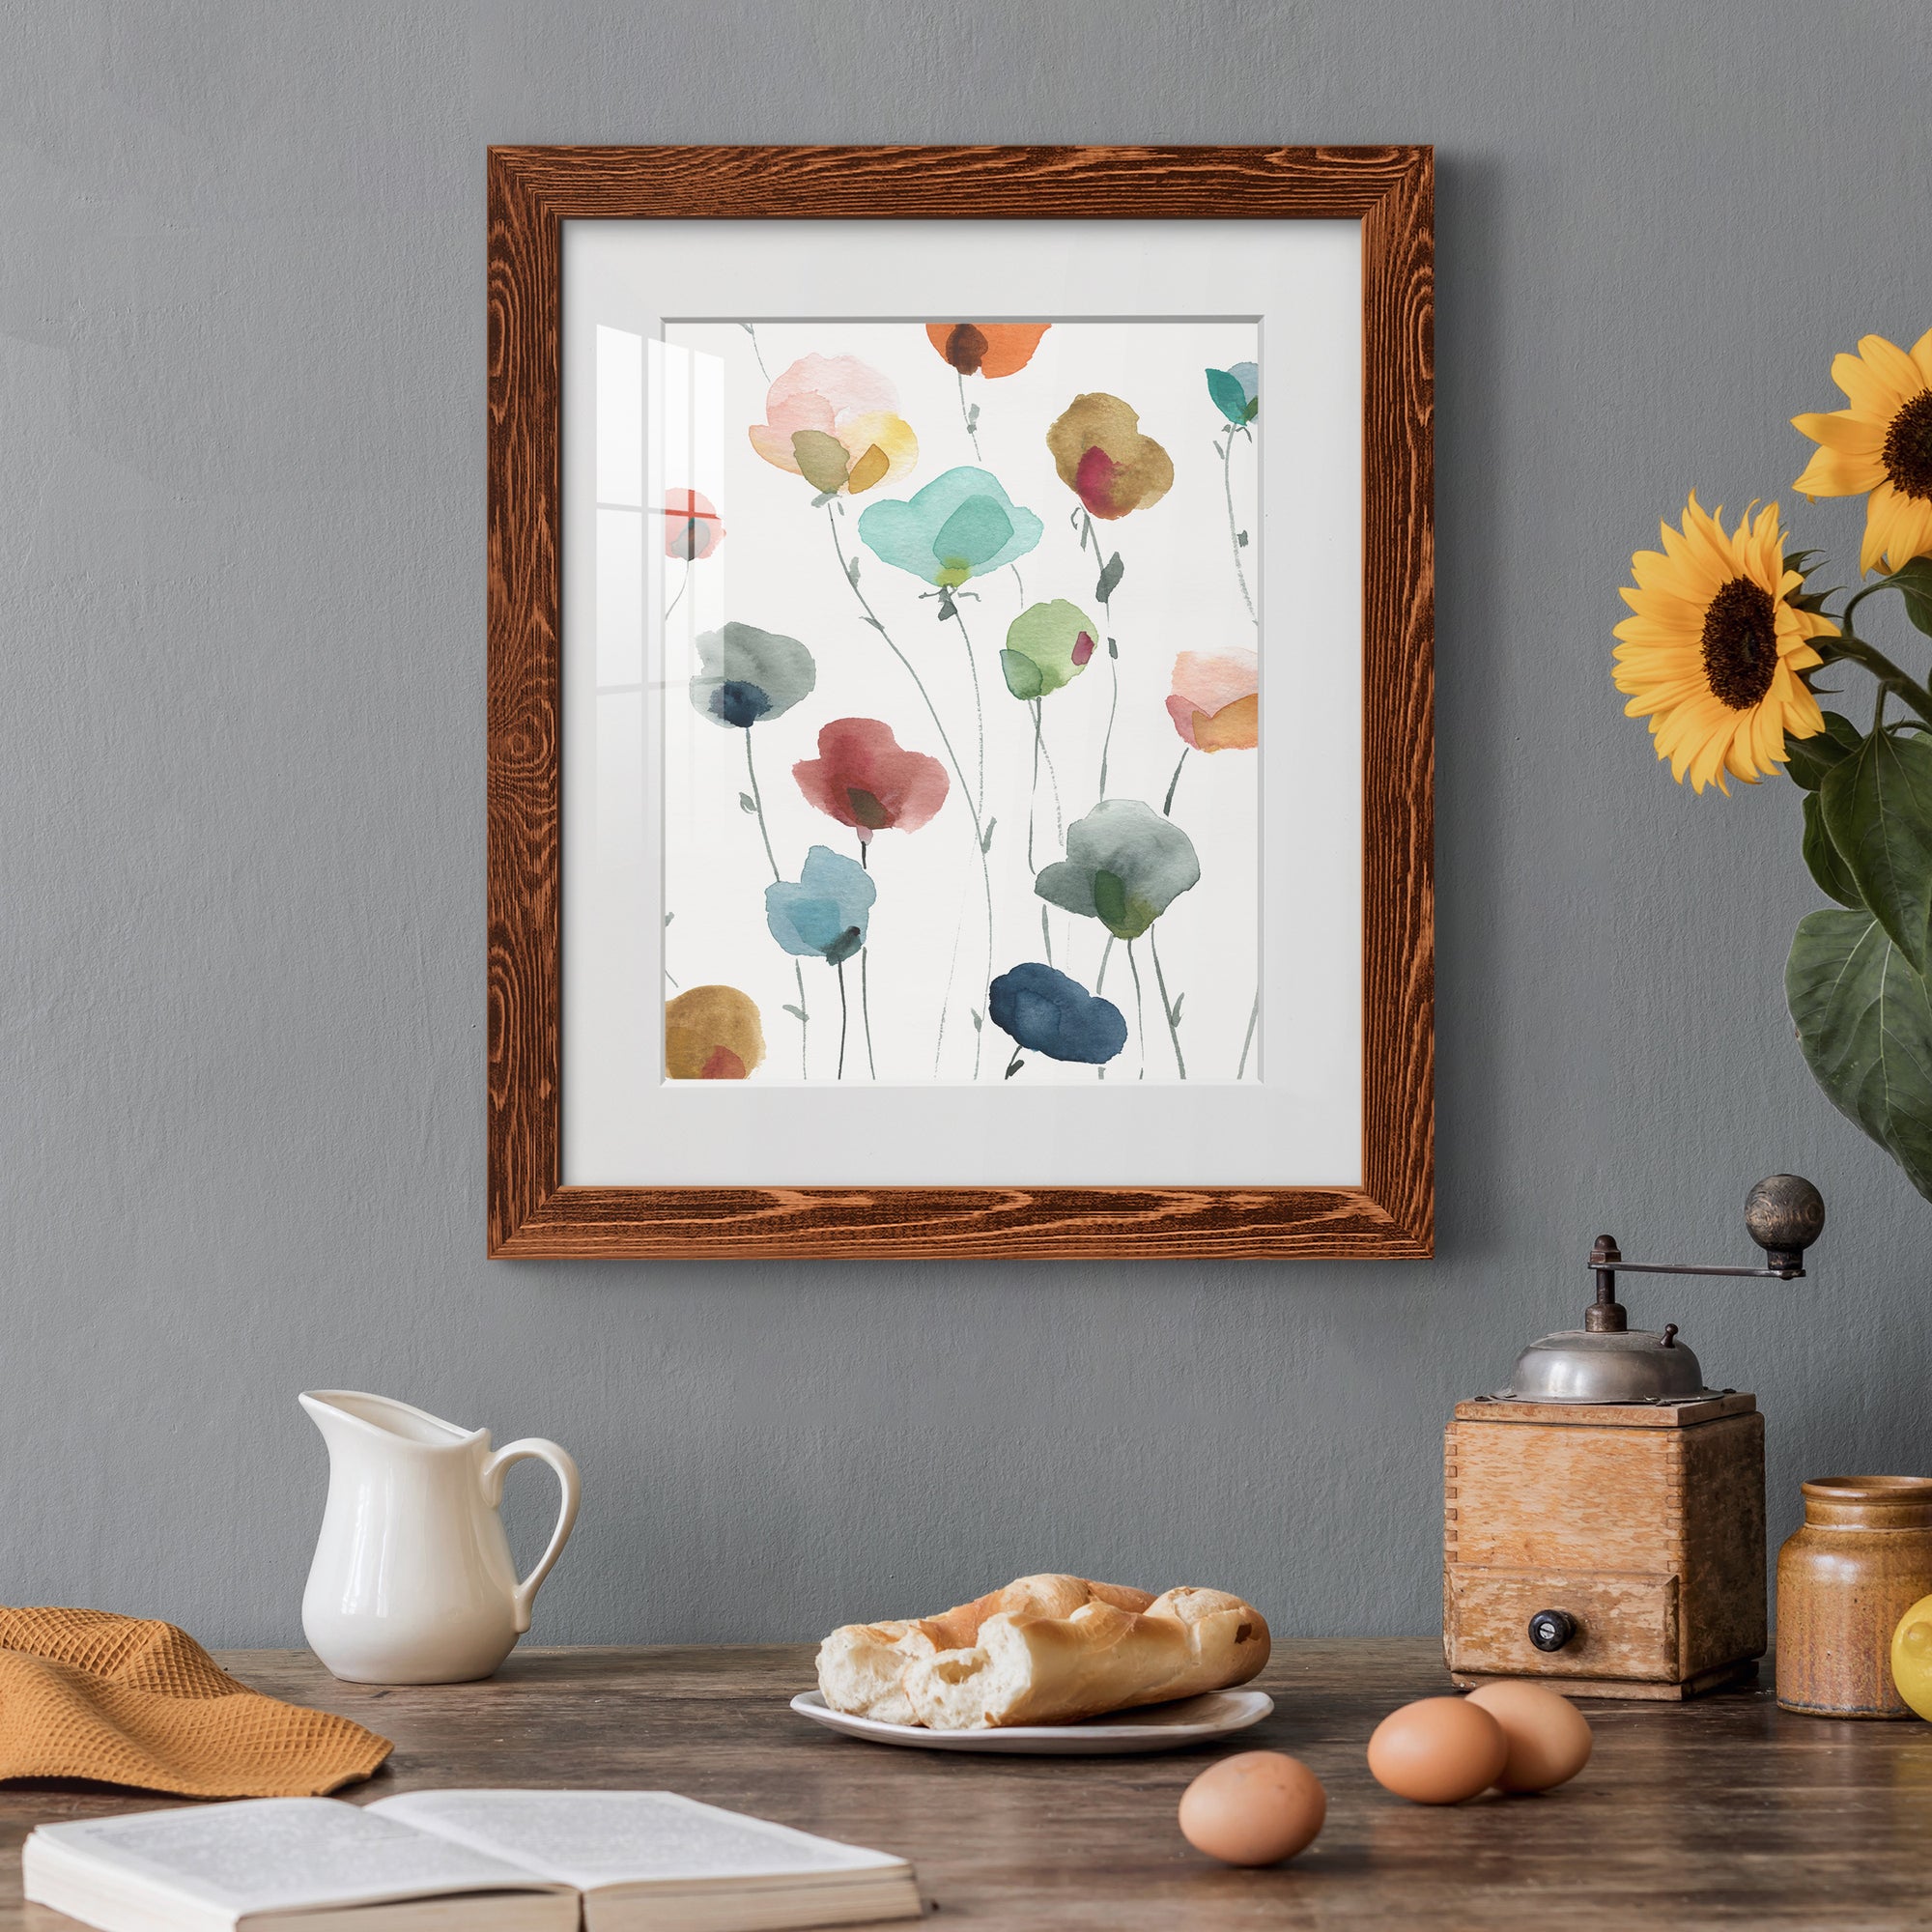 Lollipop Garden I - Premium Framed Print - Distressed Barnwood Frame - Ready to Hang